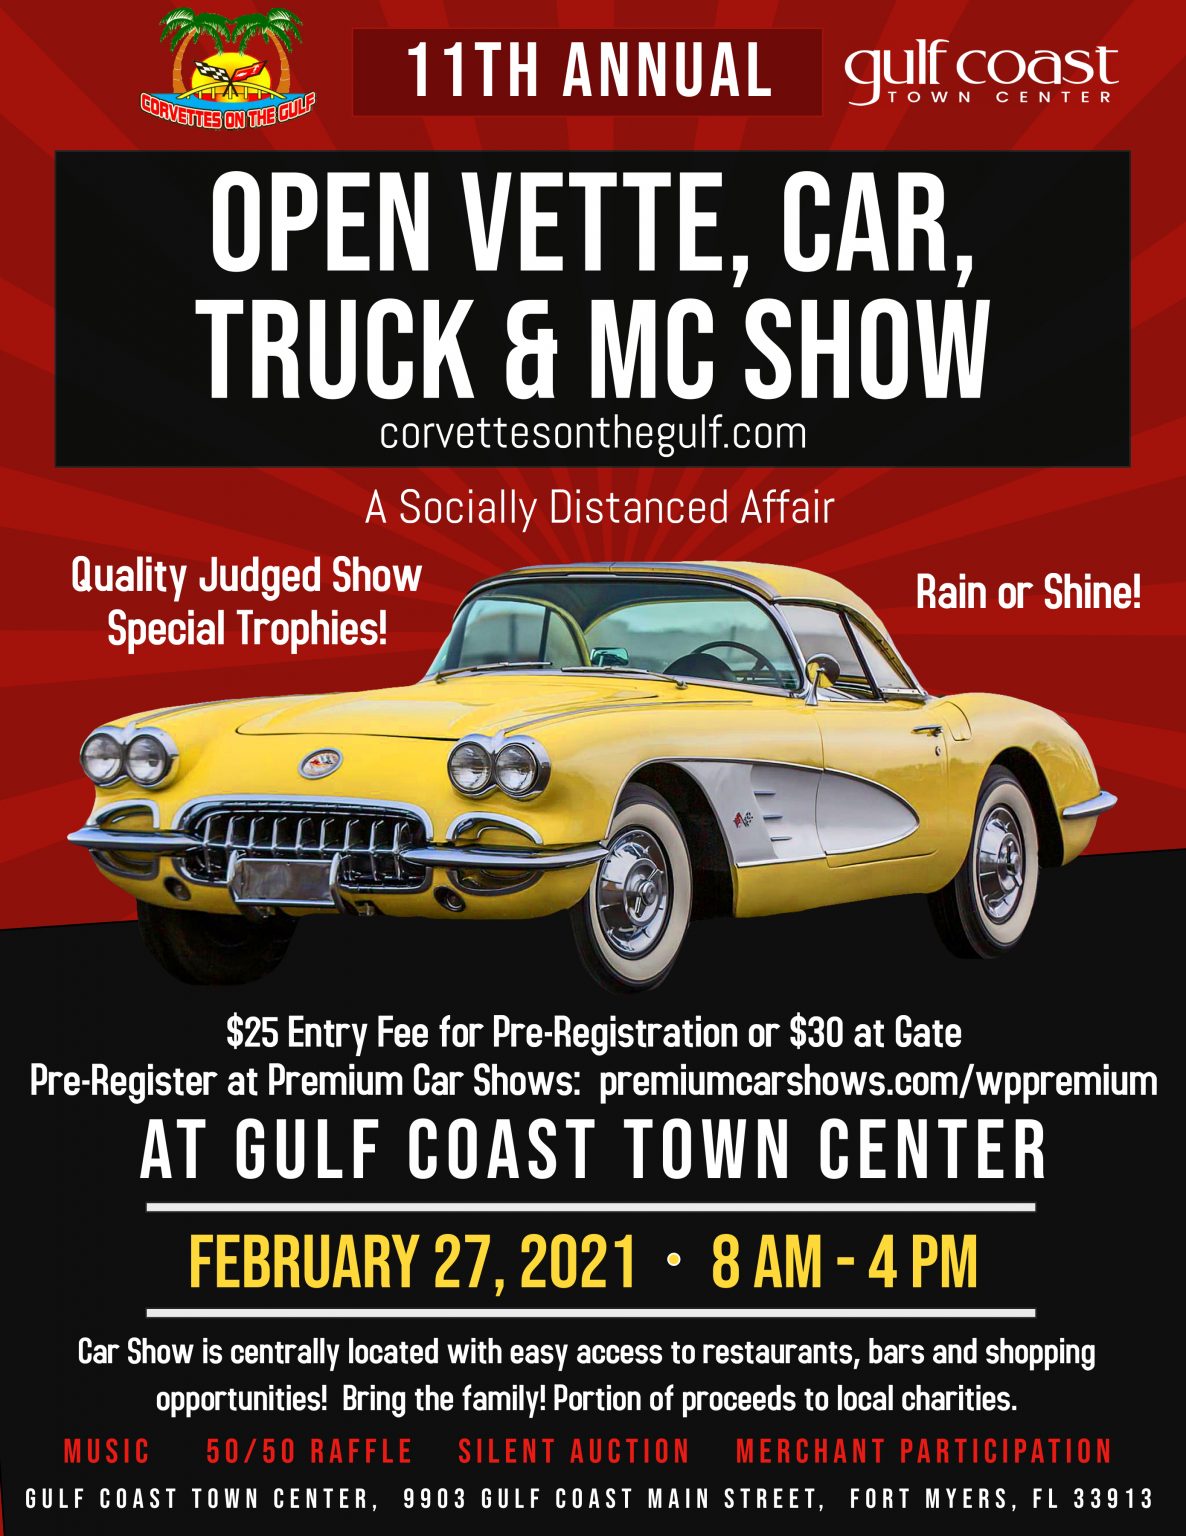 OUR CAR SHOWS Corvettes on the Gulf Southwest Florida Corvette Club